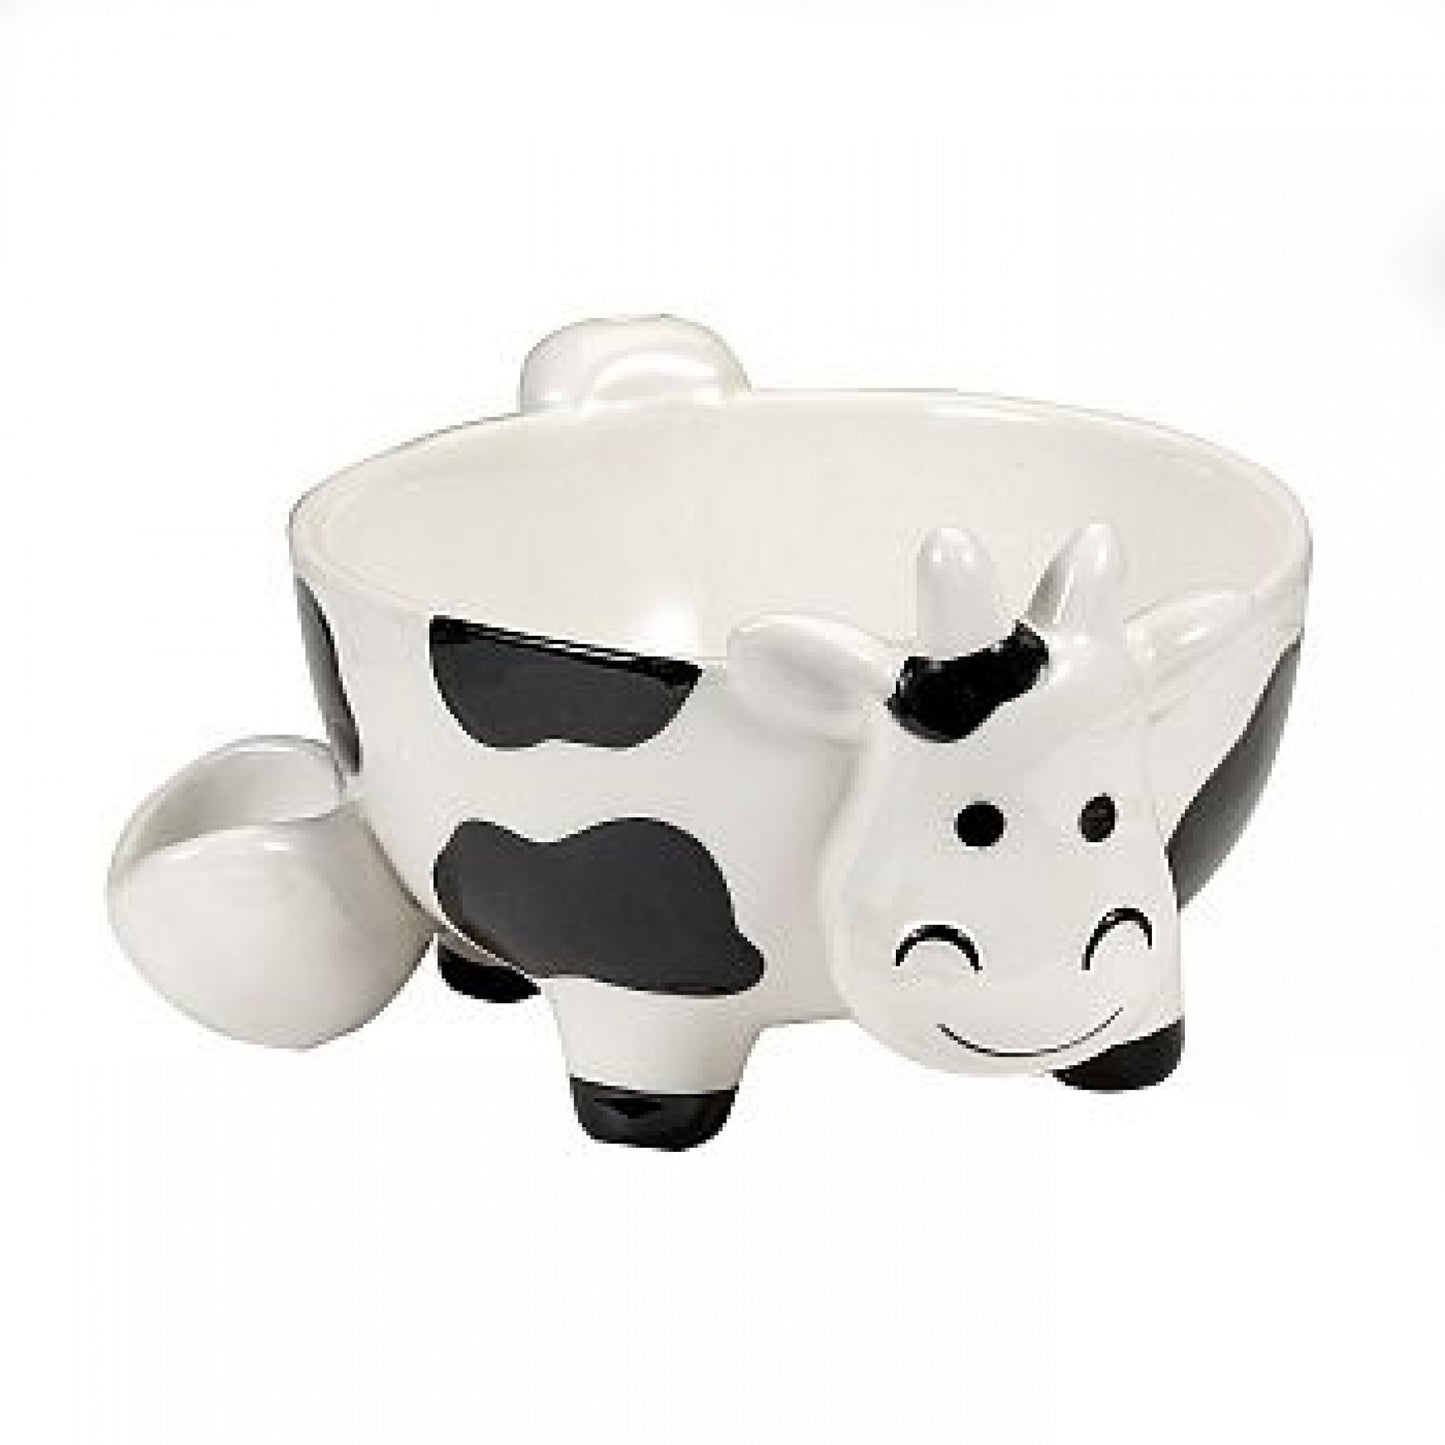 Ceramic Cow Bowl Pipe.  